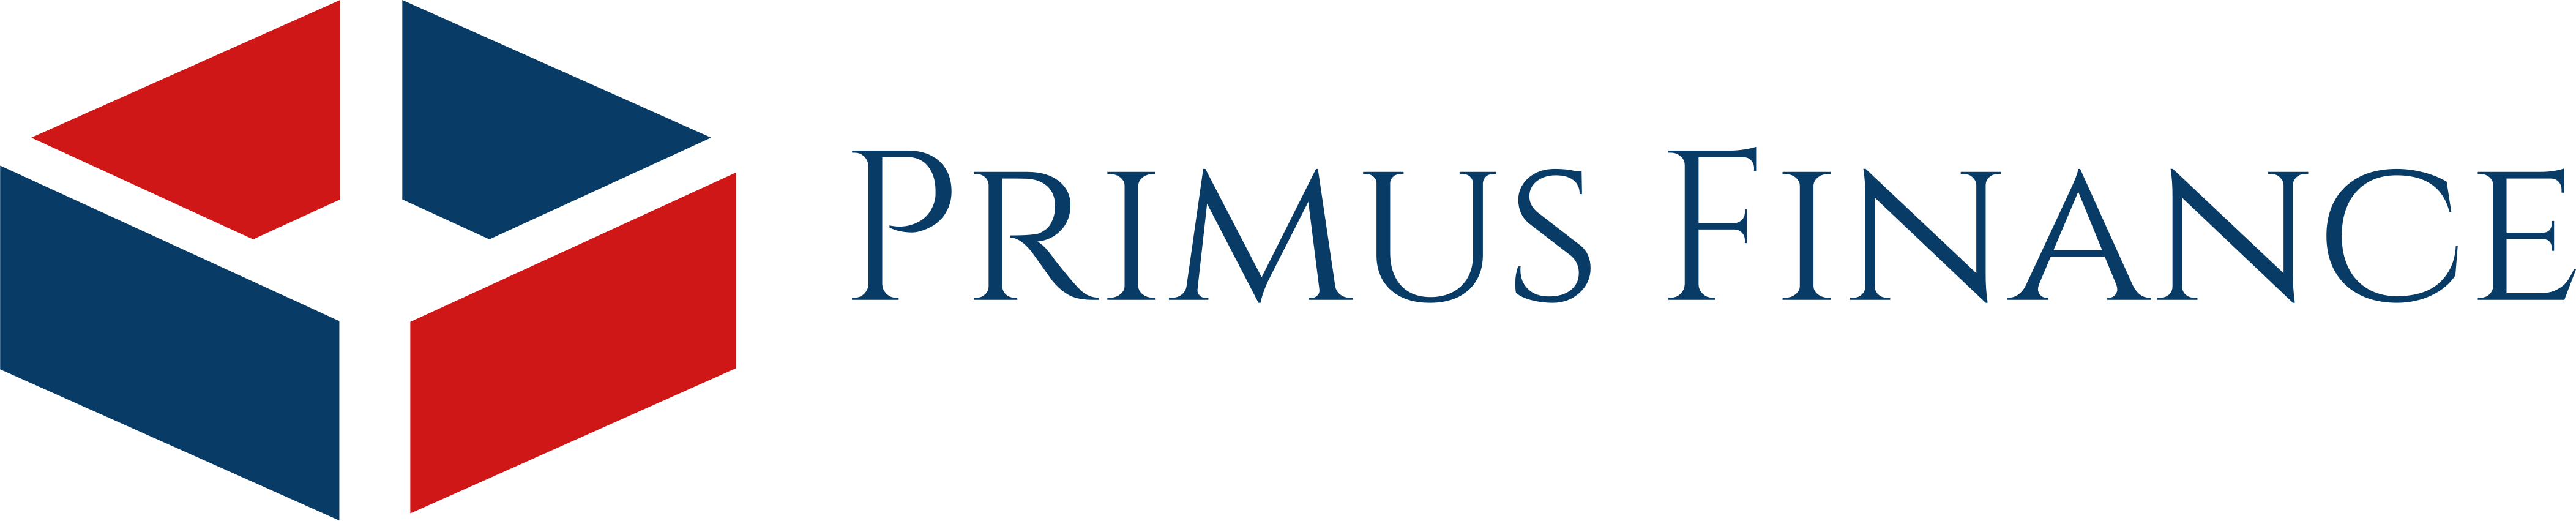 Primus Finance